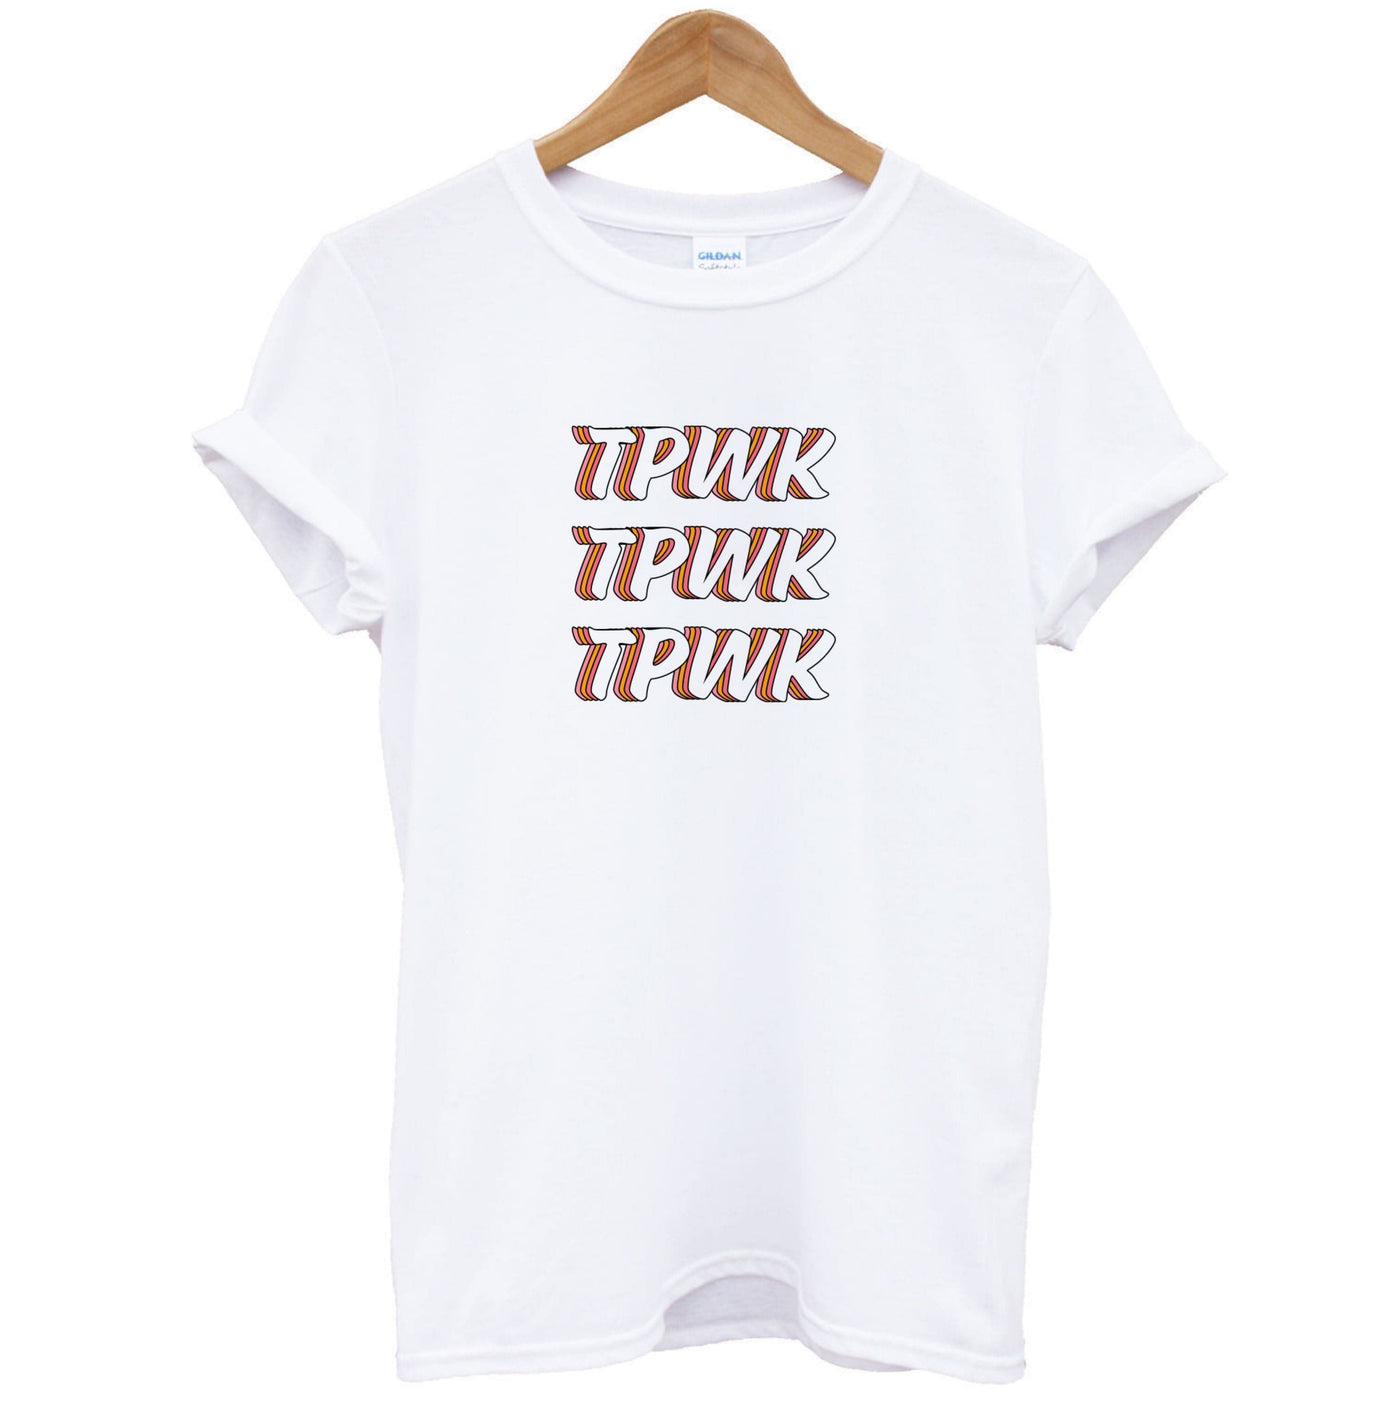 TPWK - Harry T-Shirt